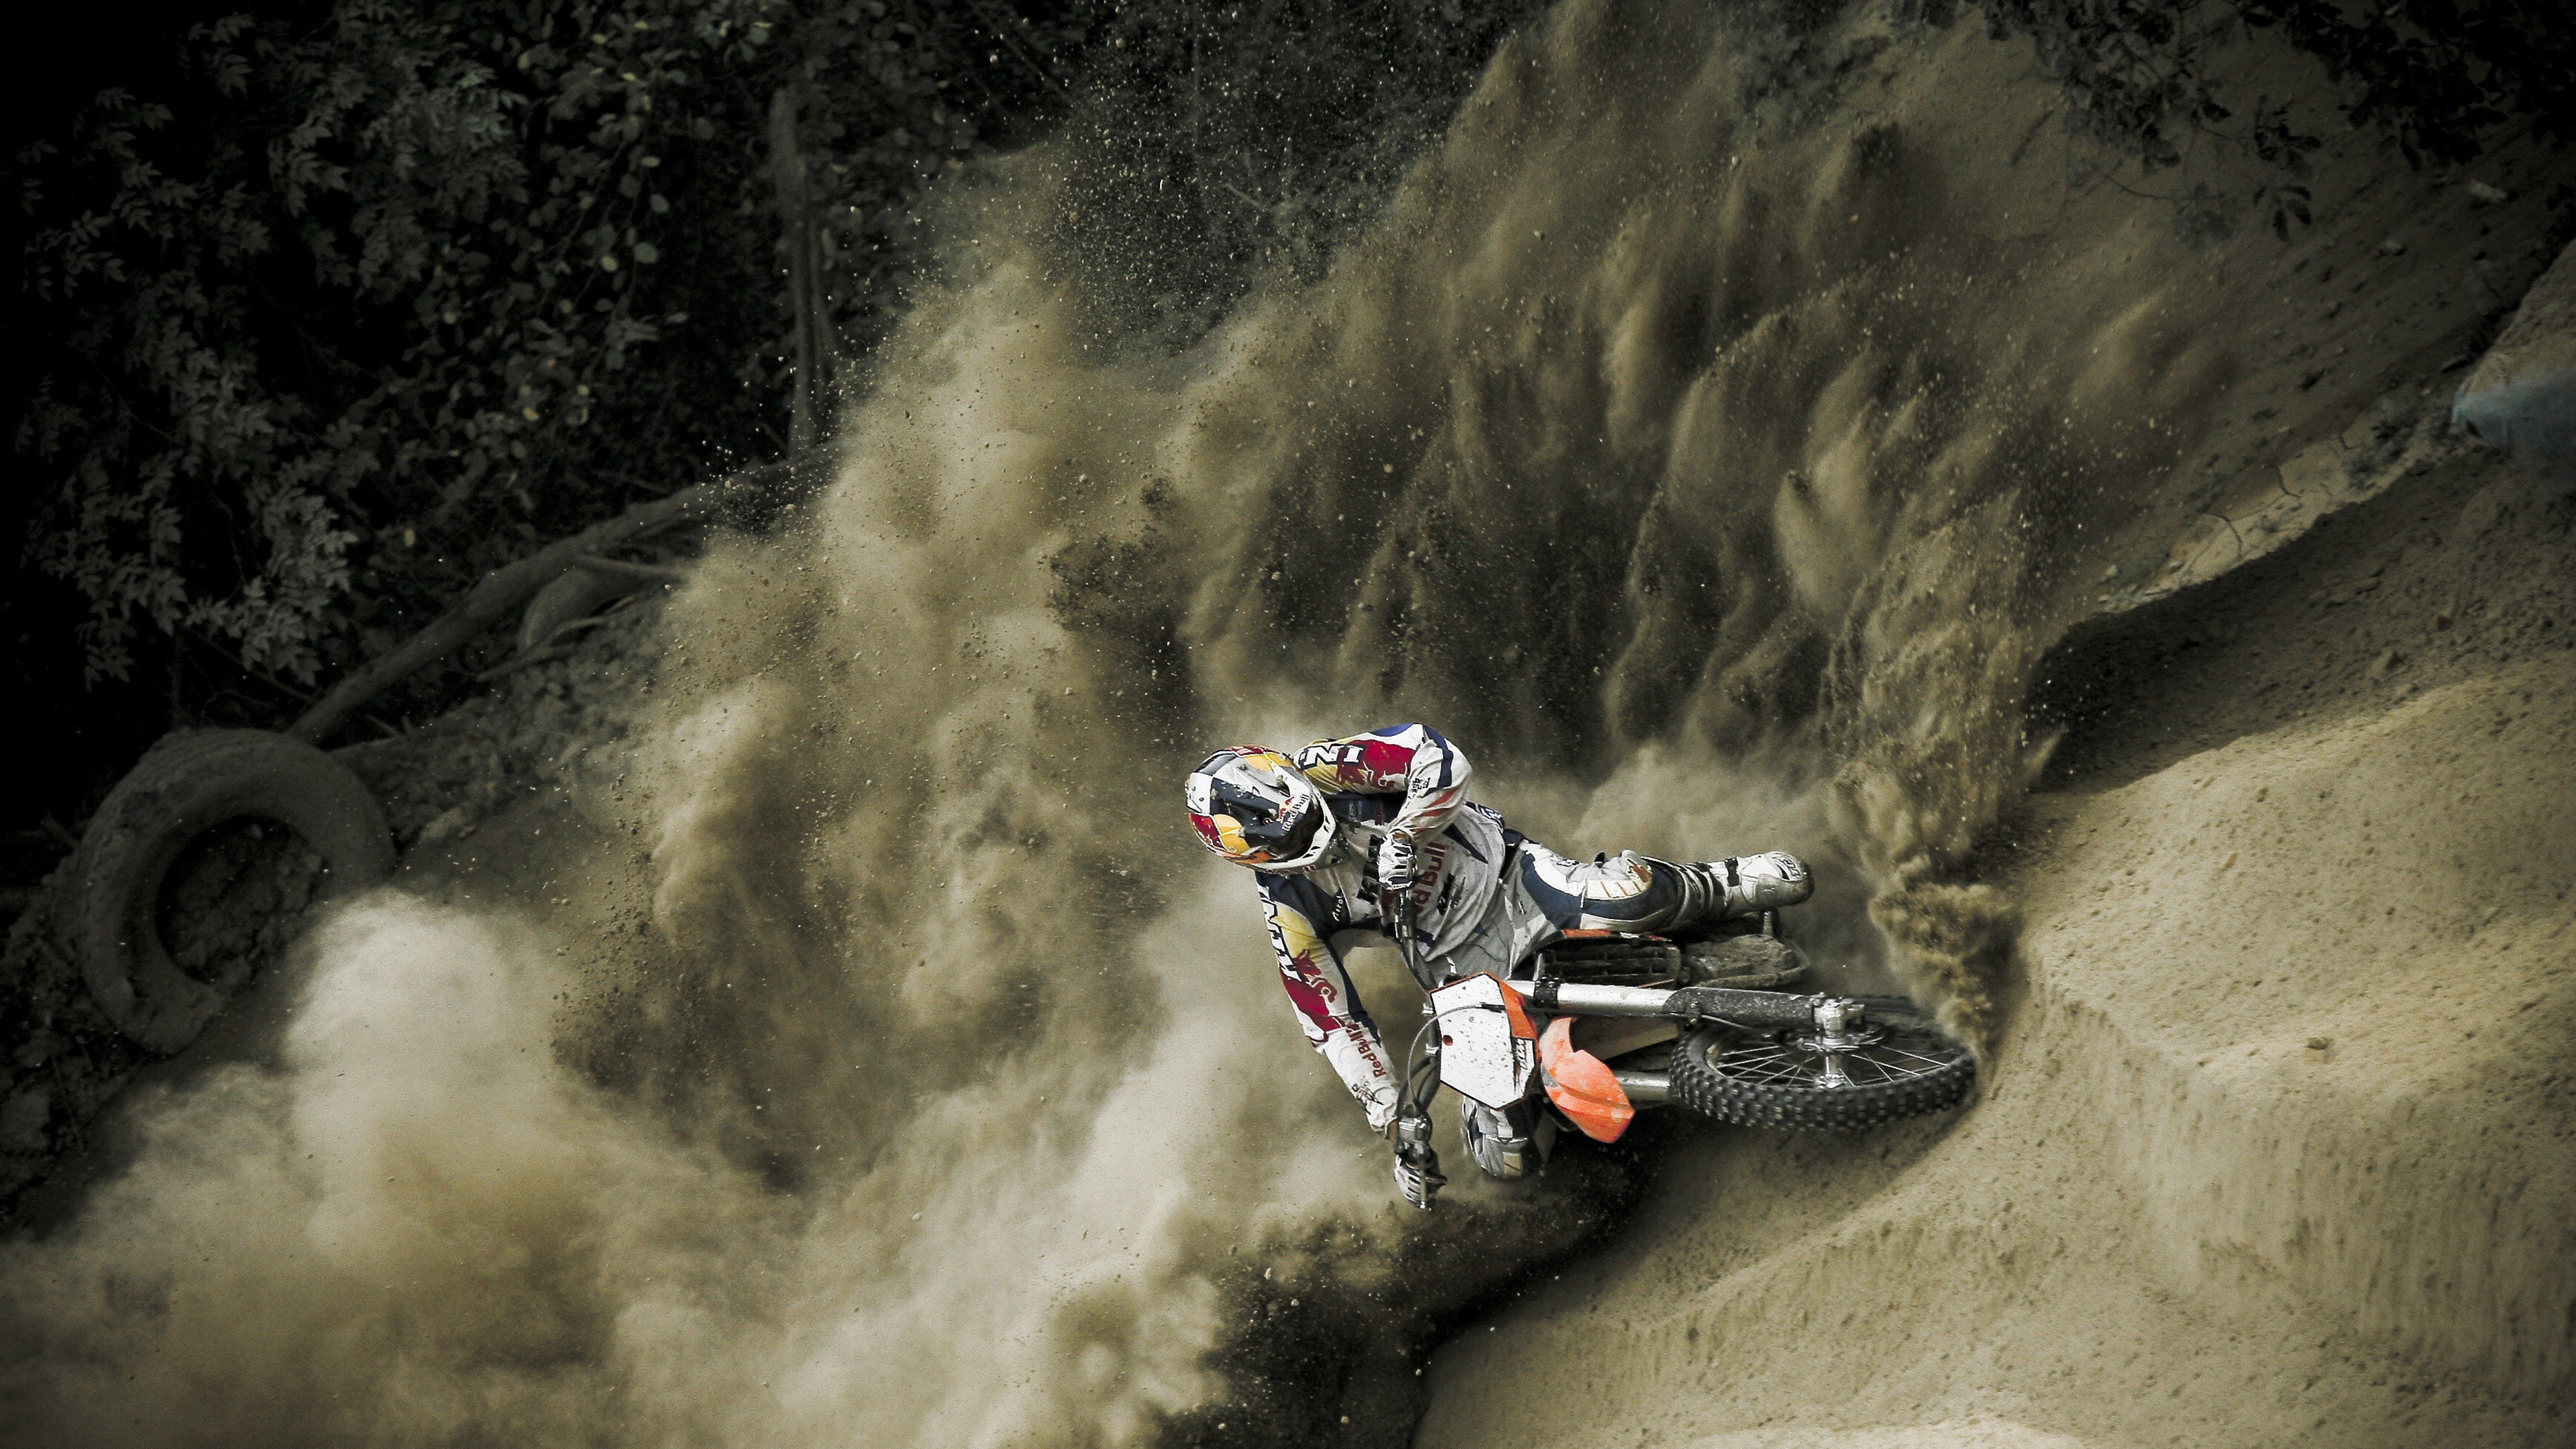 Stunt: Stuntman doing acrobatic maneuvering of the motorcycle in the sand, KTM dirt bike. 3840x2160 4K Wallpaper.